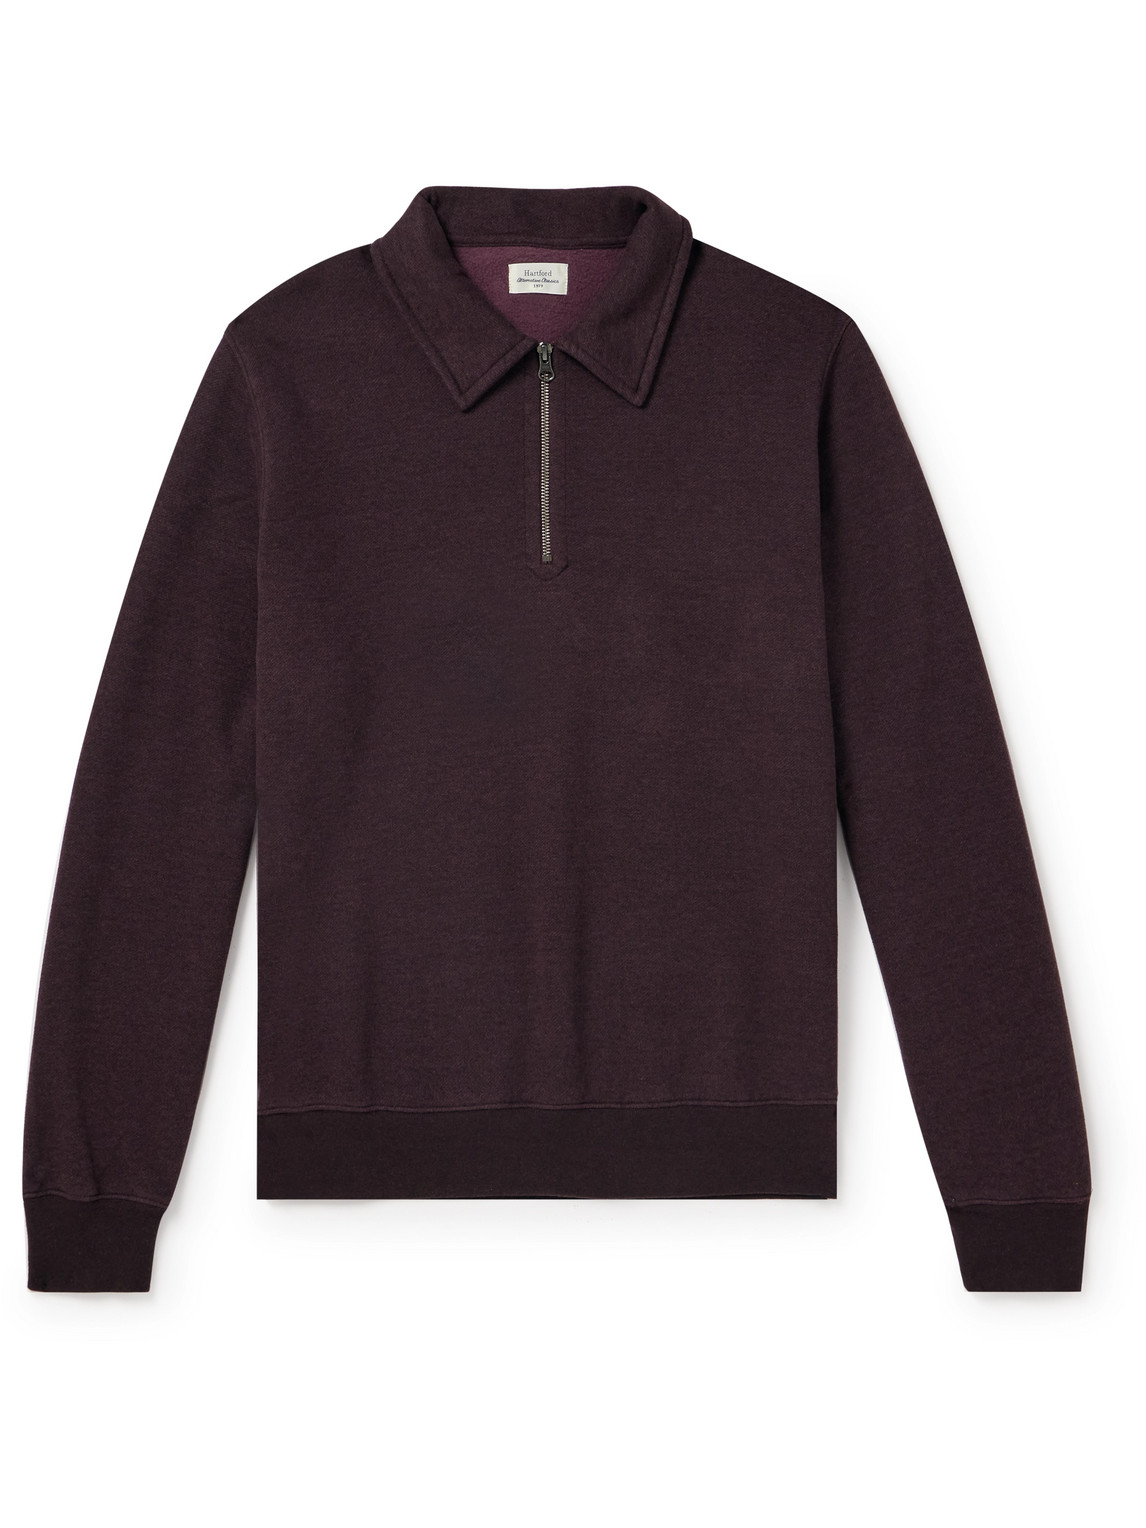 Cotton-Blend Jersey Half-Zip Sweater